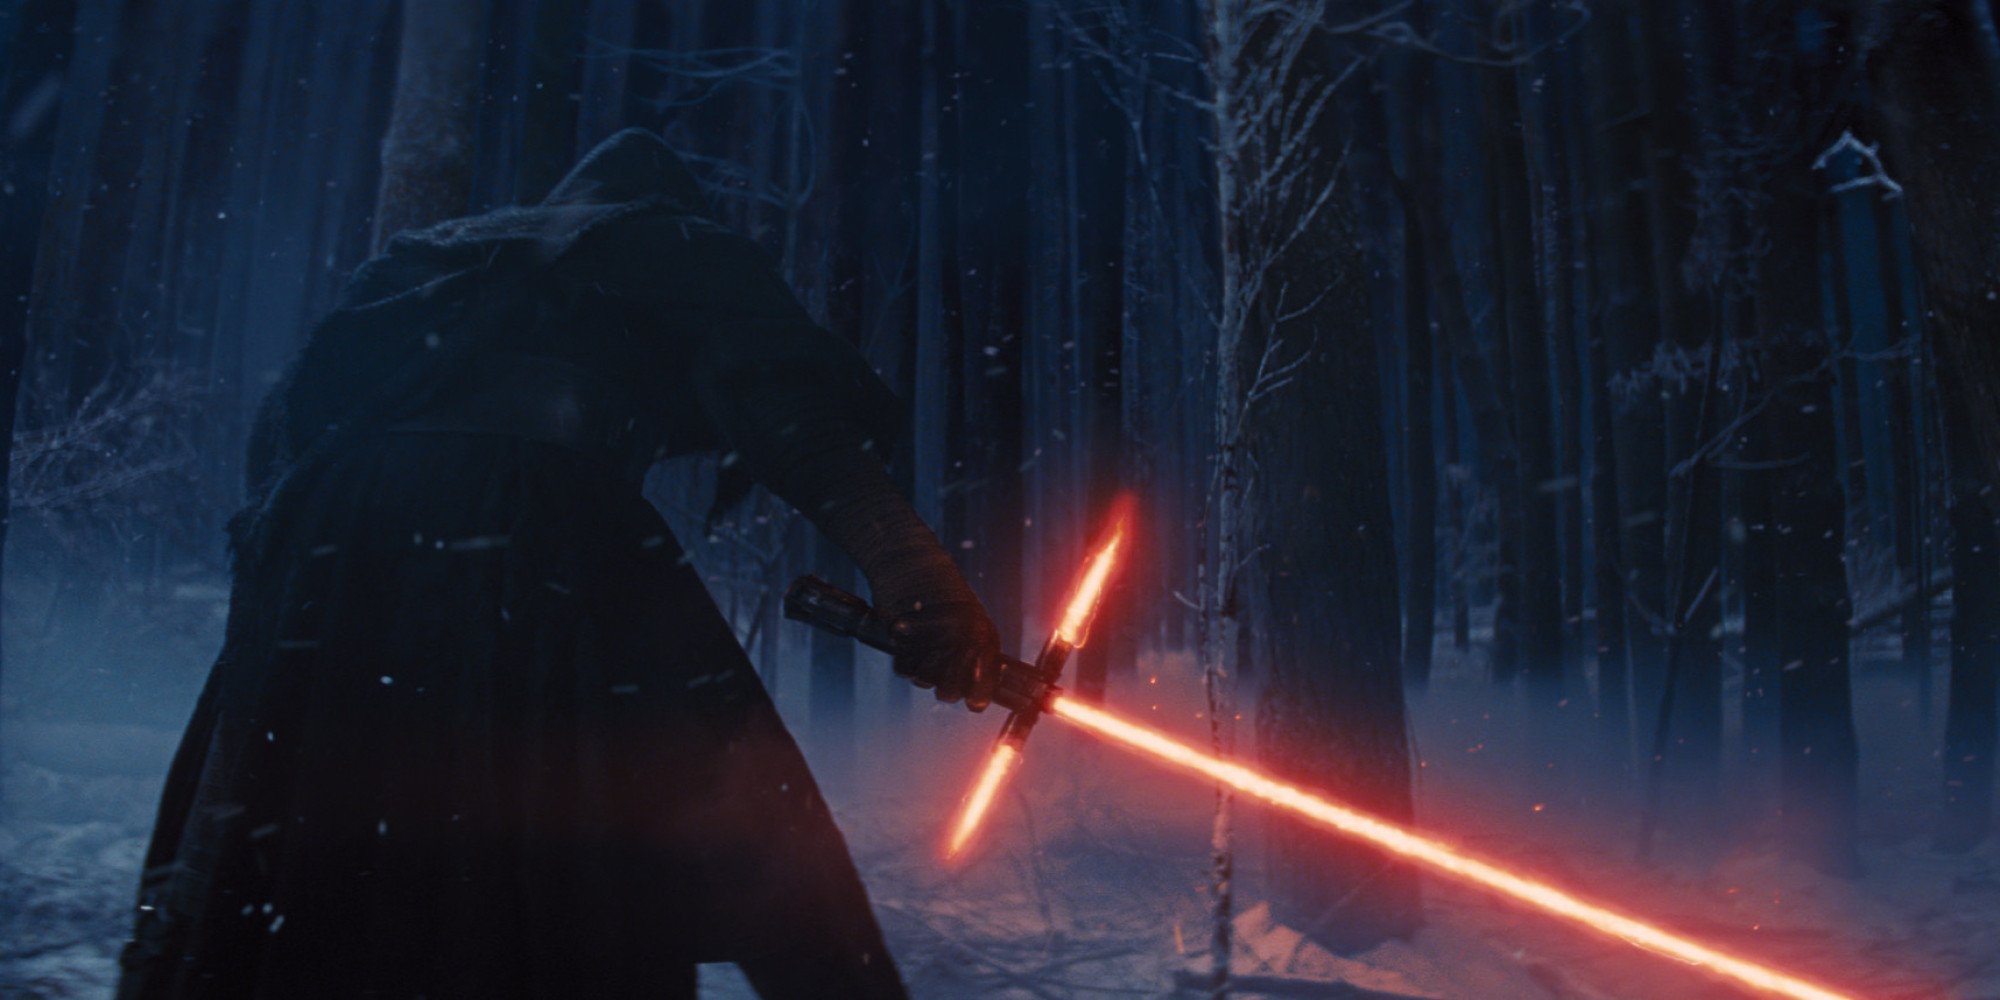 Kylo Ren in the teaser trailer for Star Wars: The Force Awakens